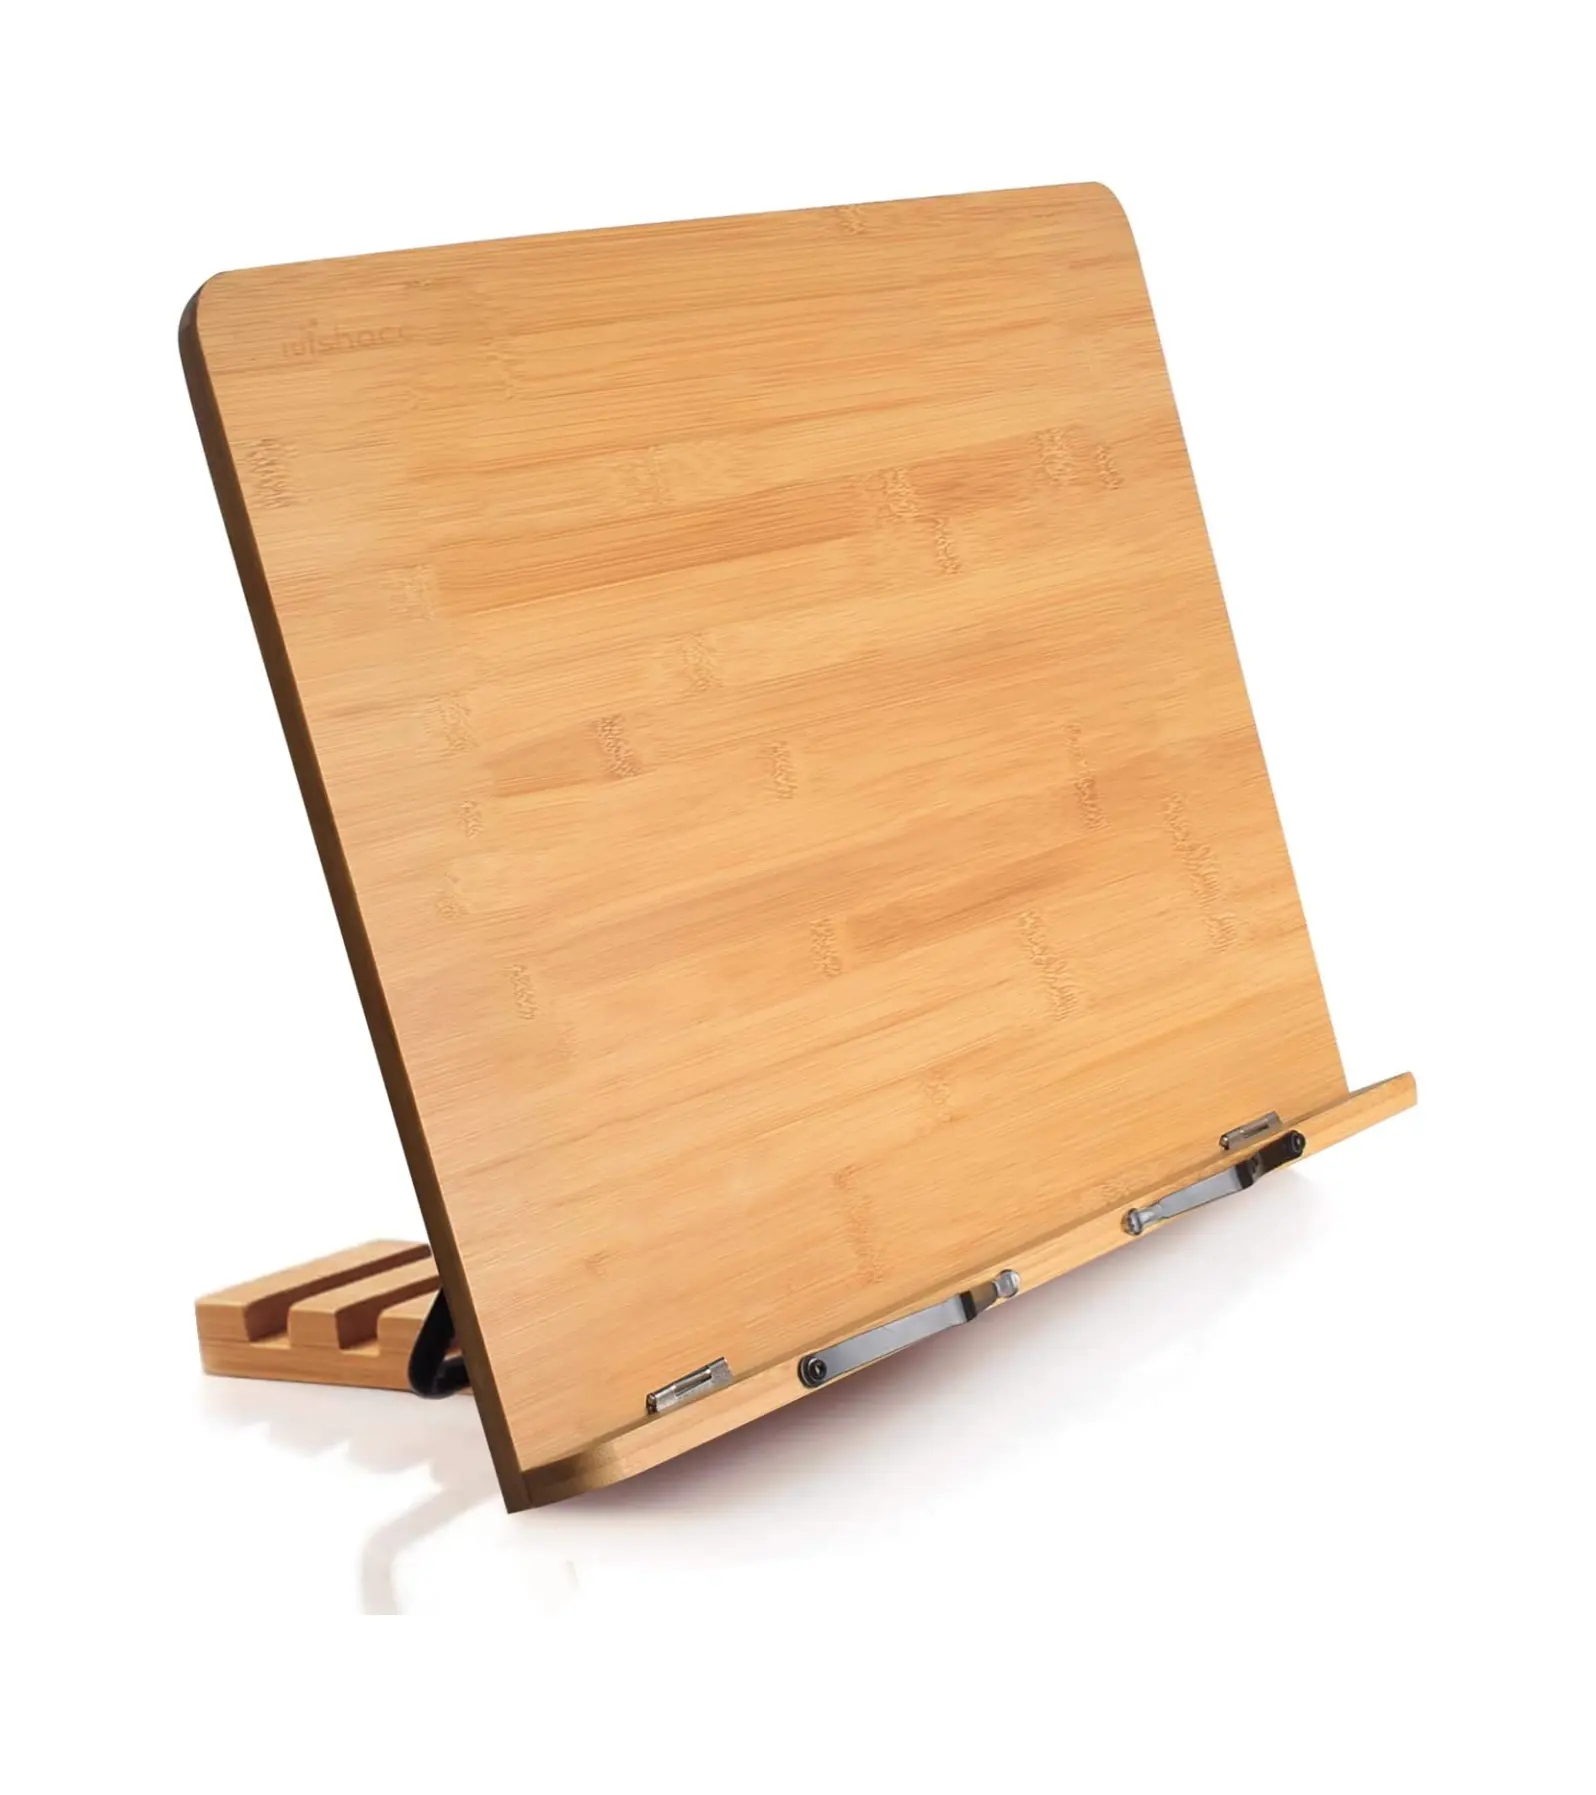 Soporte de bambú para libros de cocina, soporte grande para lectura con 5 altura ajustable, plegable, de madera, para documentos de escritorio